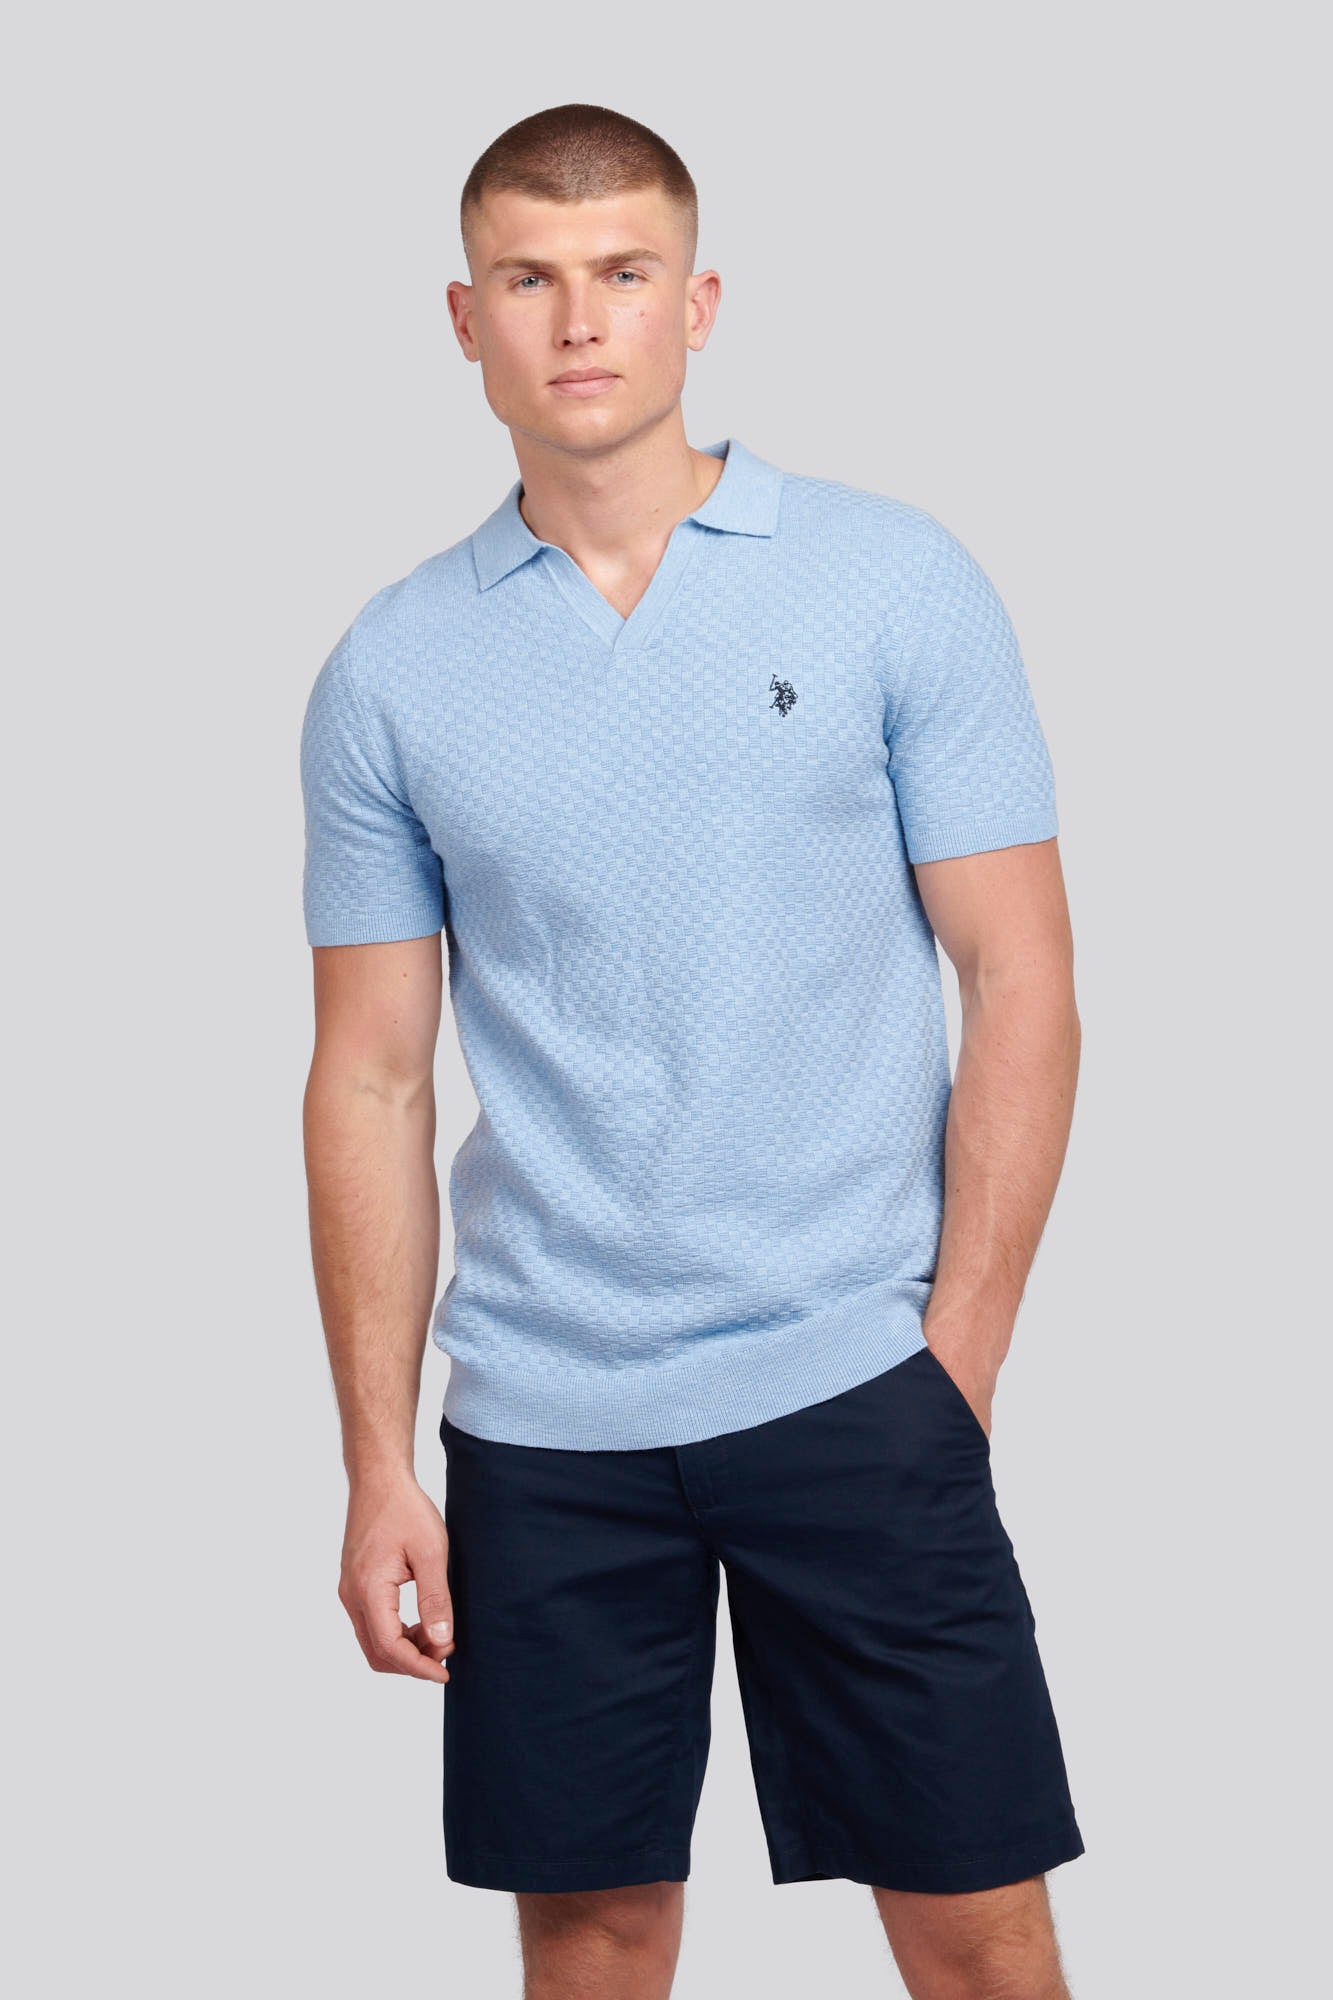 U.S. Polo Assn. Mens Regular Fit Revere Texture Knit Polo Shirt in Parisian Blue Marl